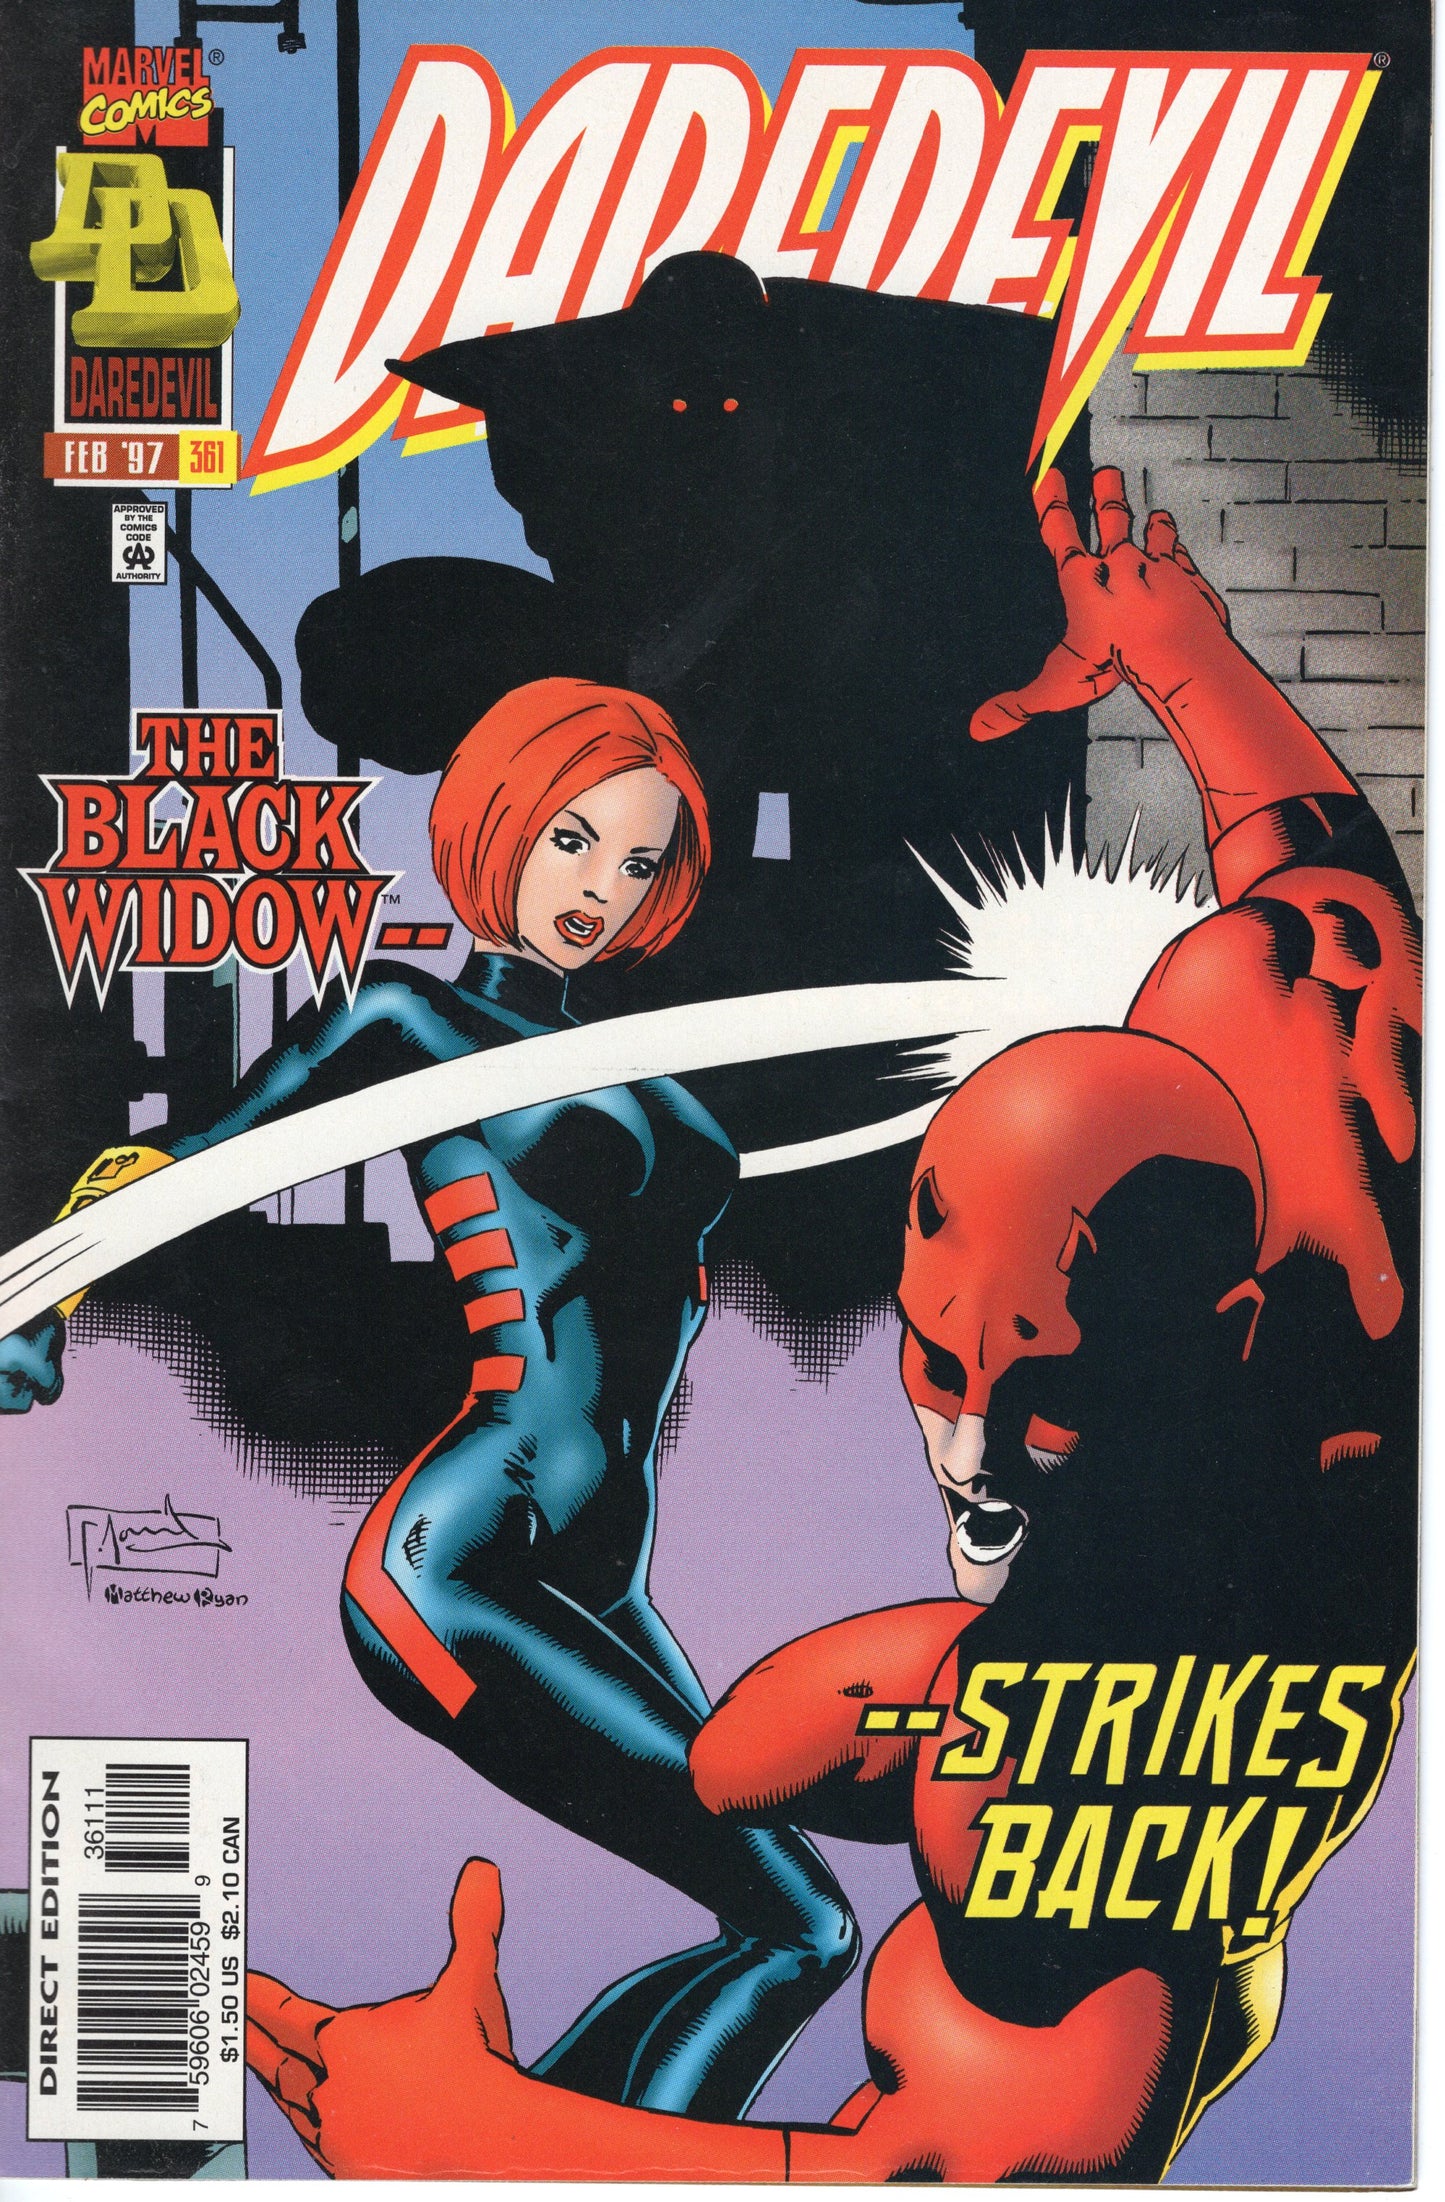 Daredevil - Issue 361 (Feb. 1997 - Marvel Comics) VF/NM